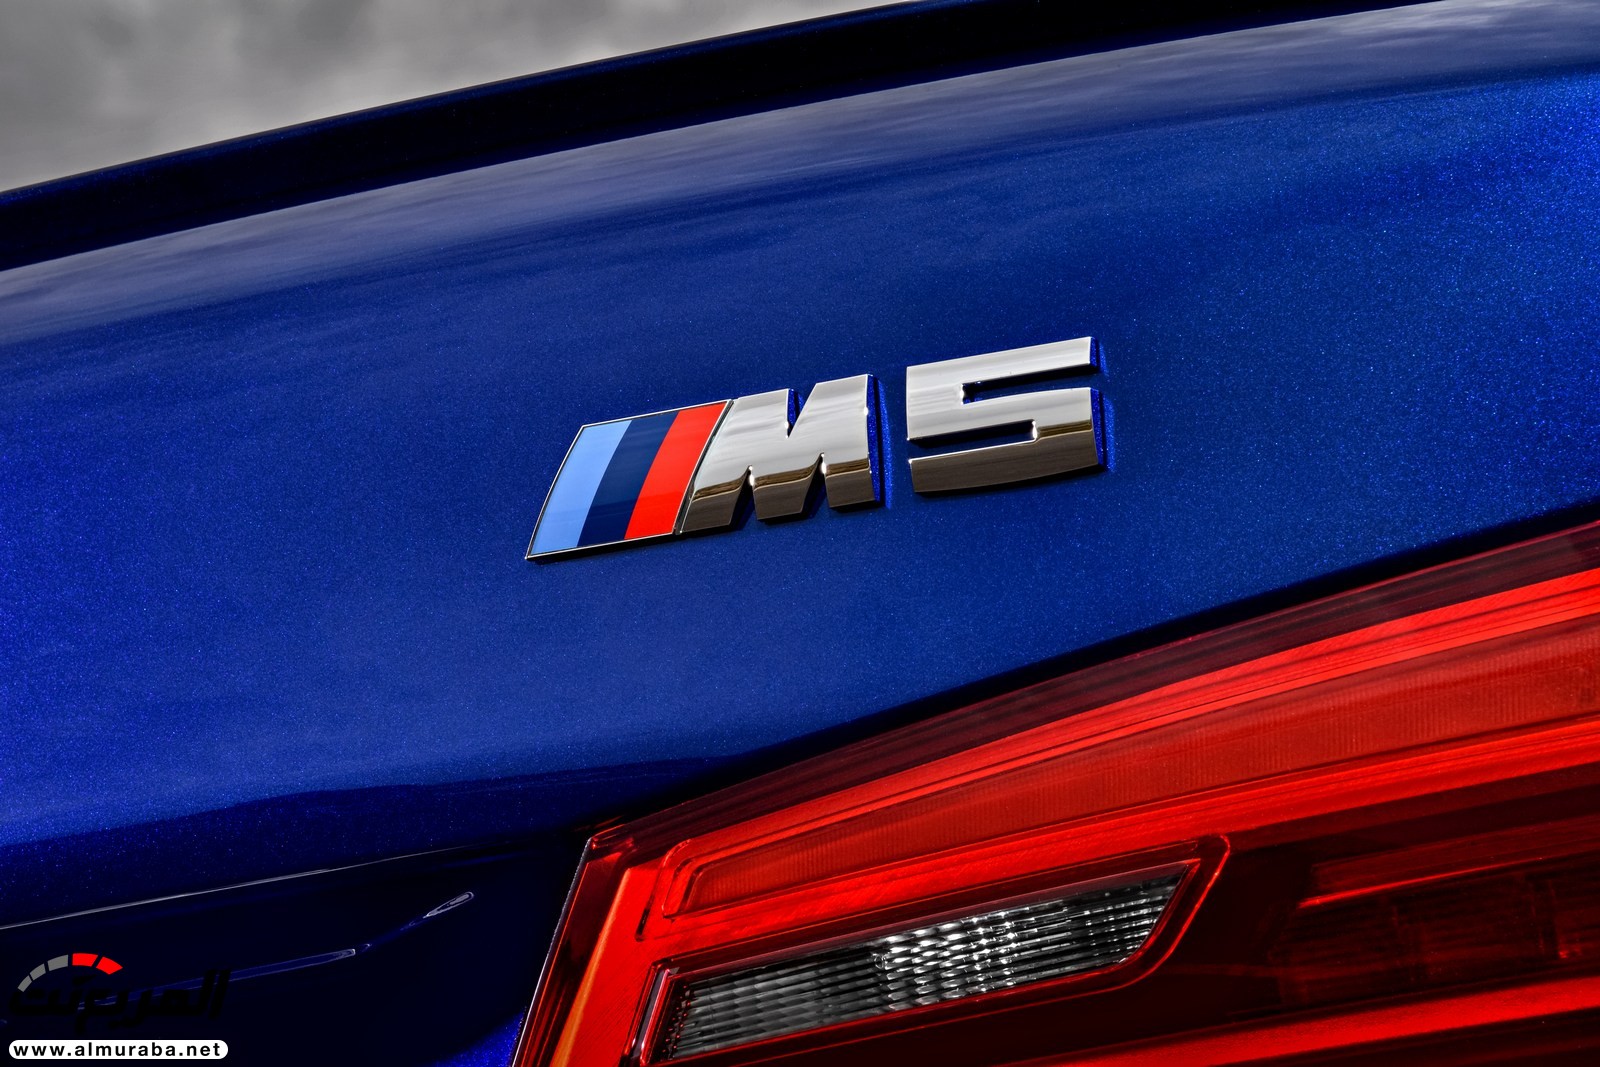 بي ام دبليو M5 2018 تكشف نفسها رسمياً بقوة ٦٠٠ حصان "صور ومواصفات" BMW 168